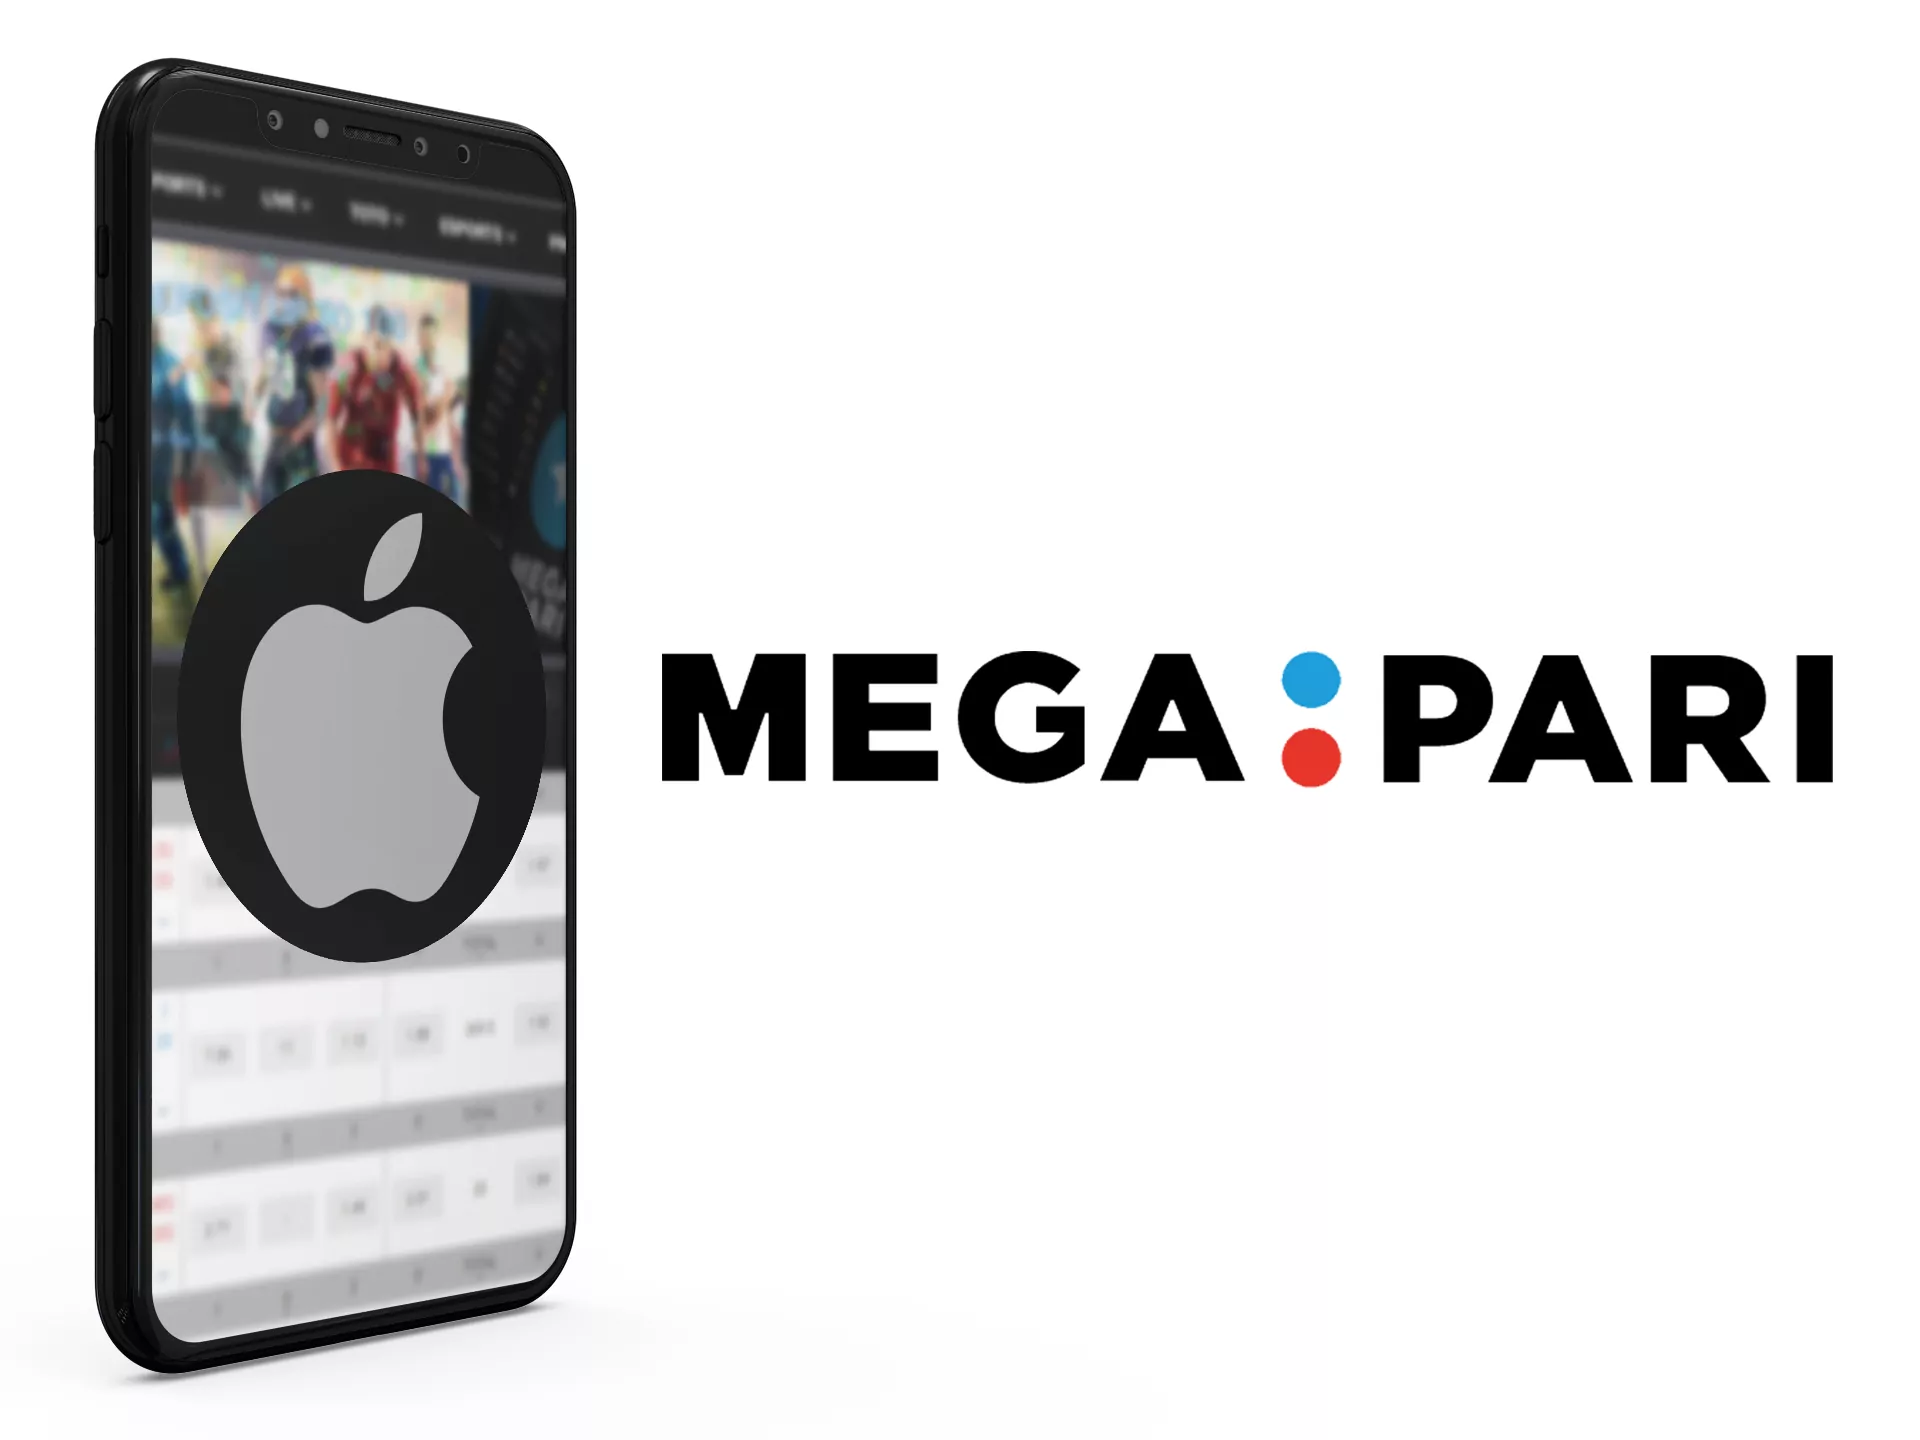 Megapari app installs on most of ios devices.